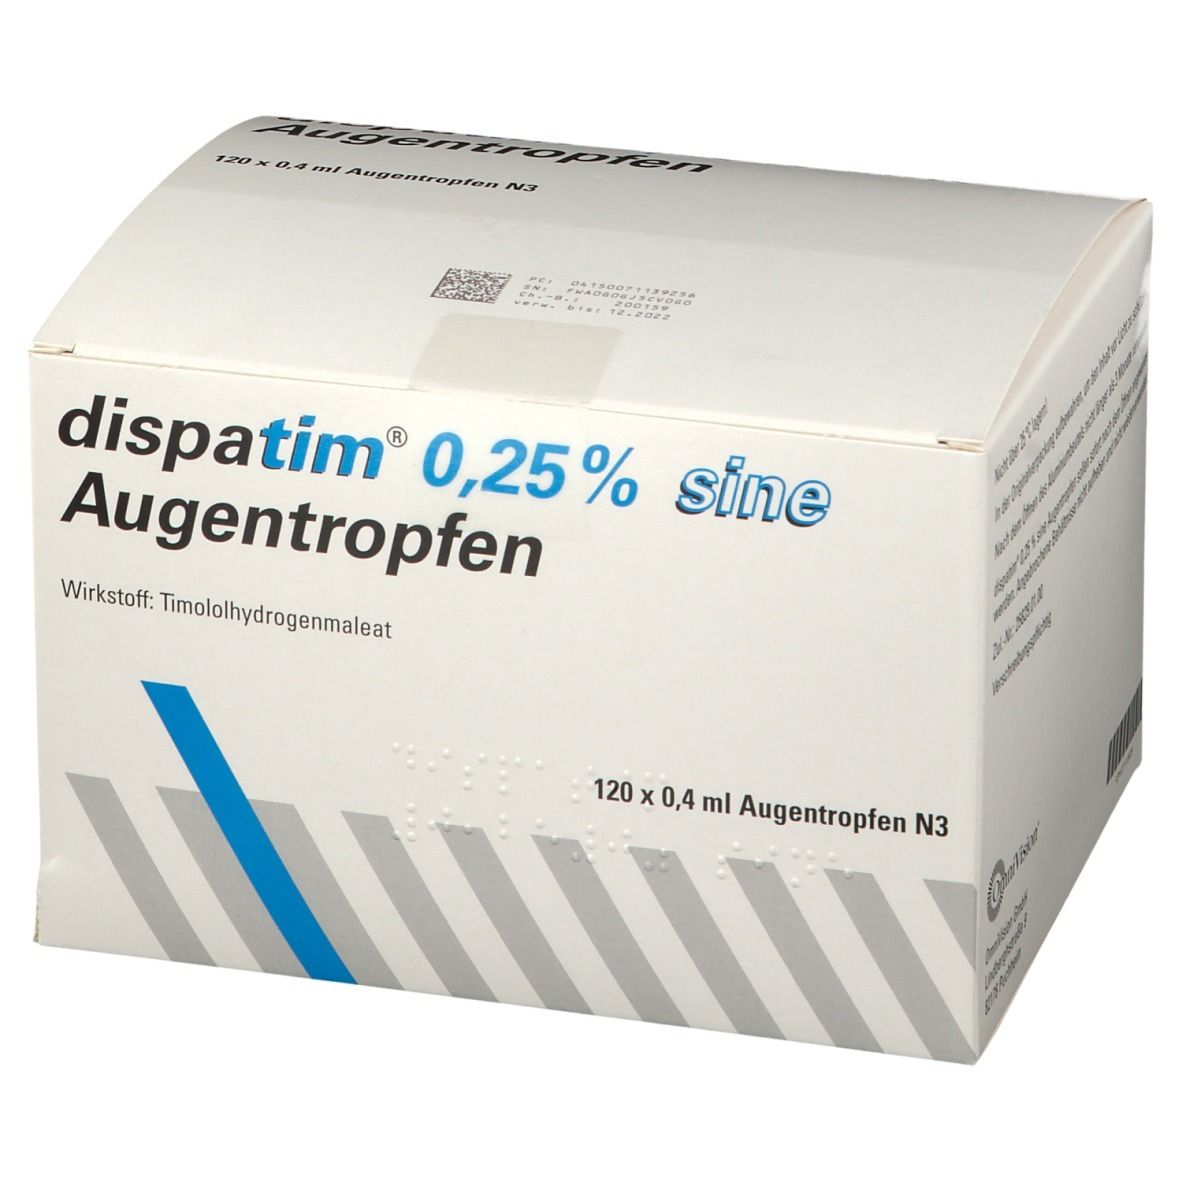 dispatim® 0,25 % sine